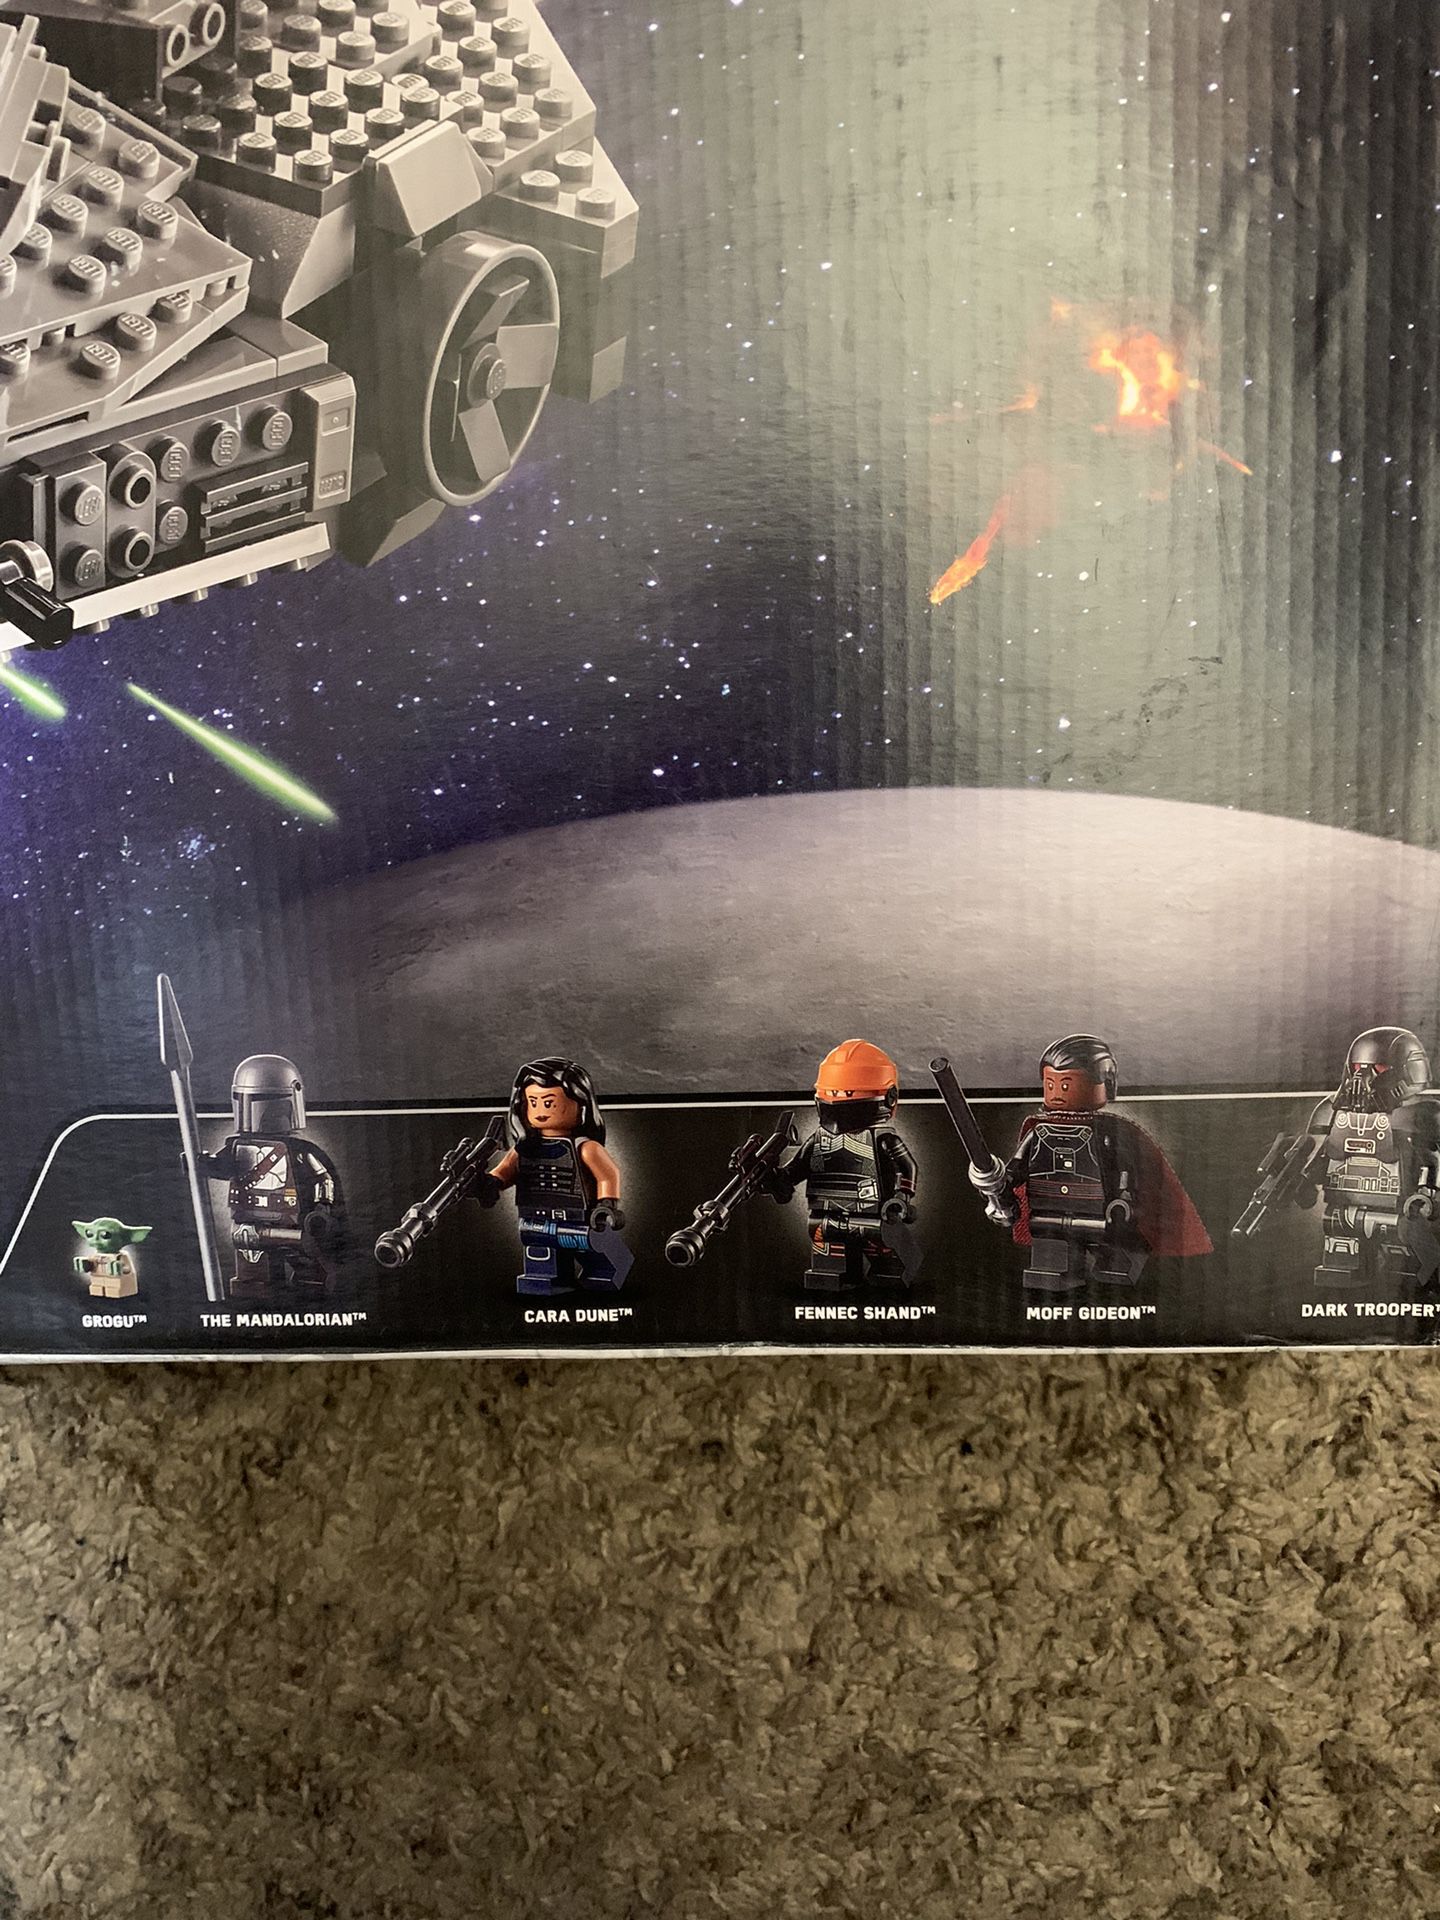 Imperial Light Cruiser Star Wars Lego’s